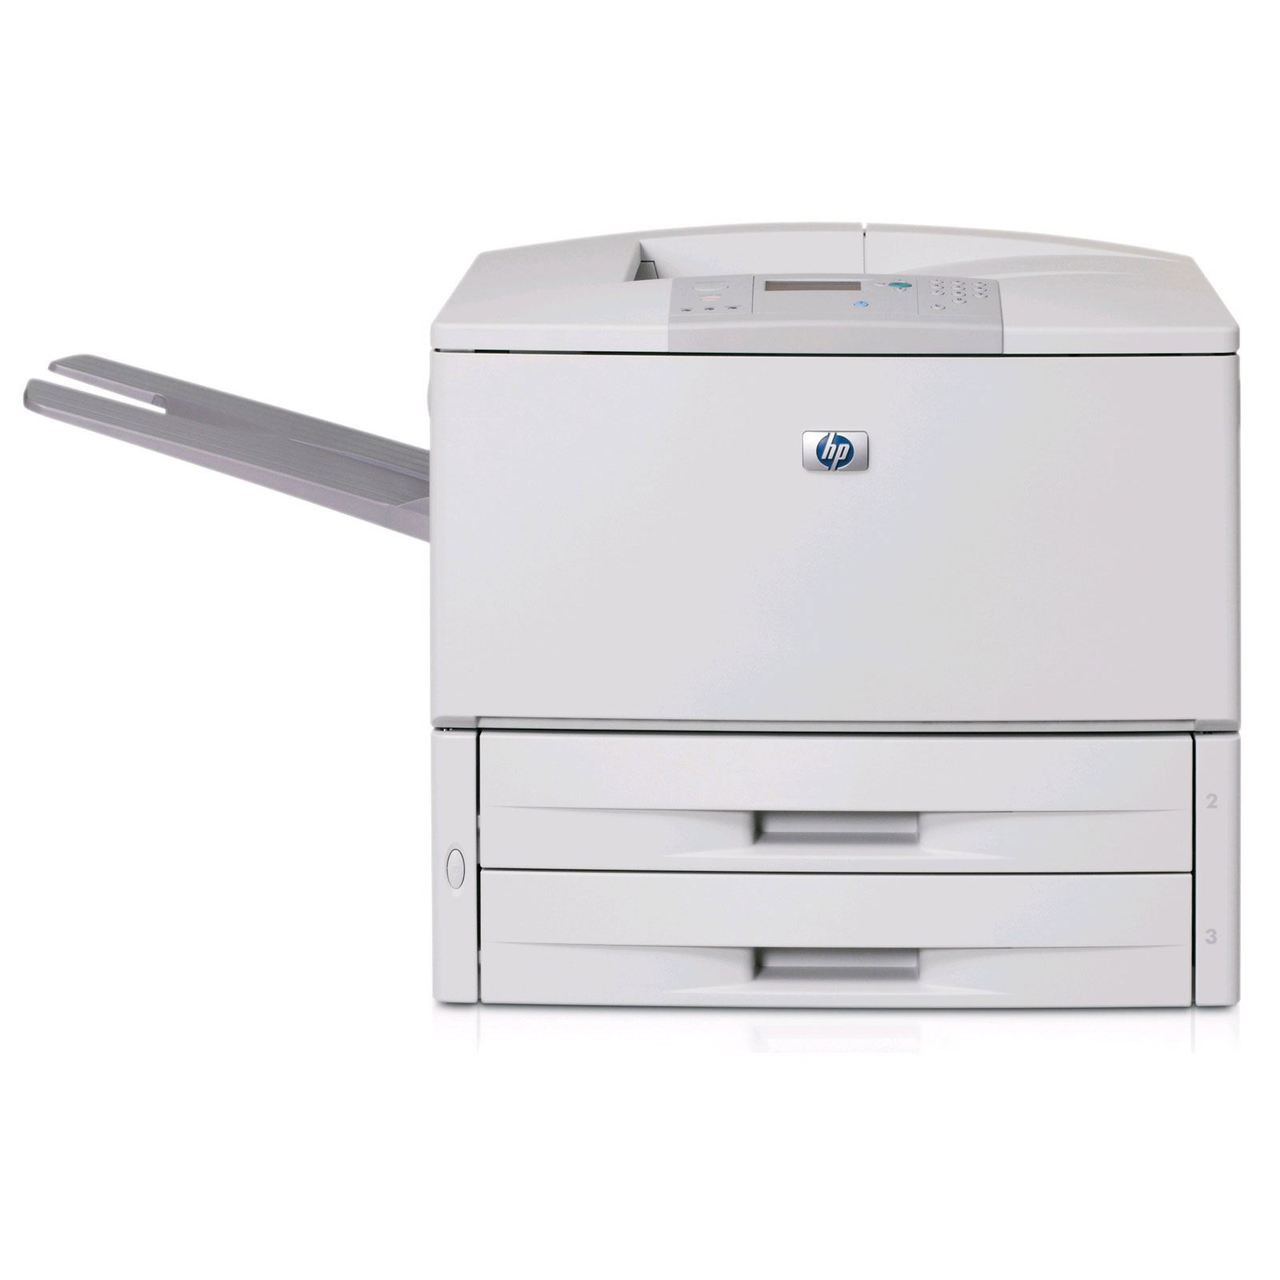 Ongewapend doel schuld HP LaserJet 9040n - Q7698A - HP 11x17 Laser Printer for sale